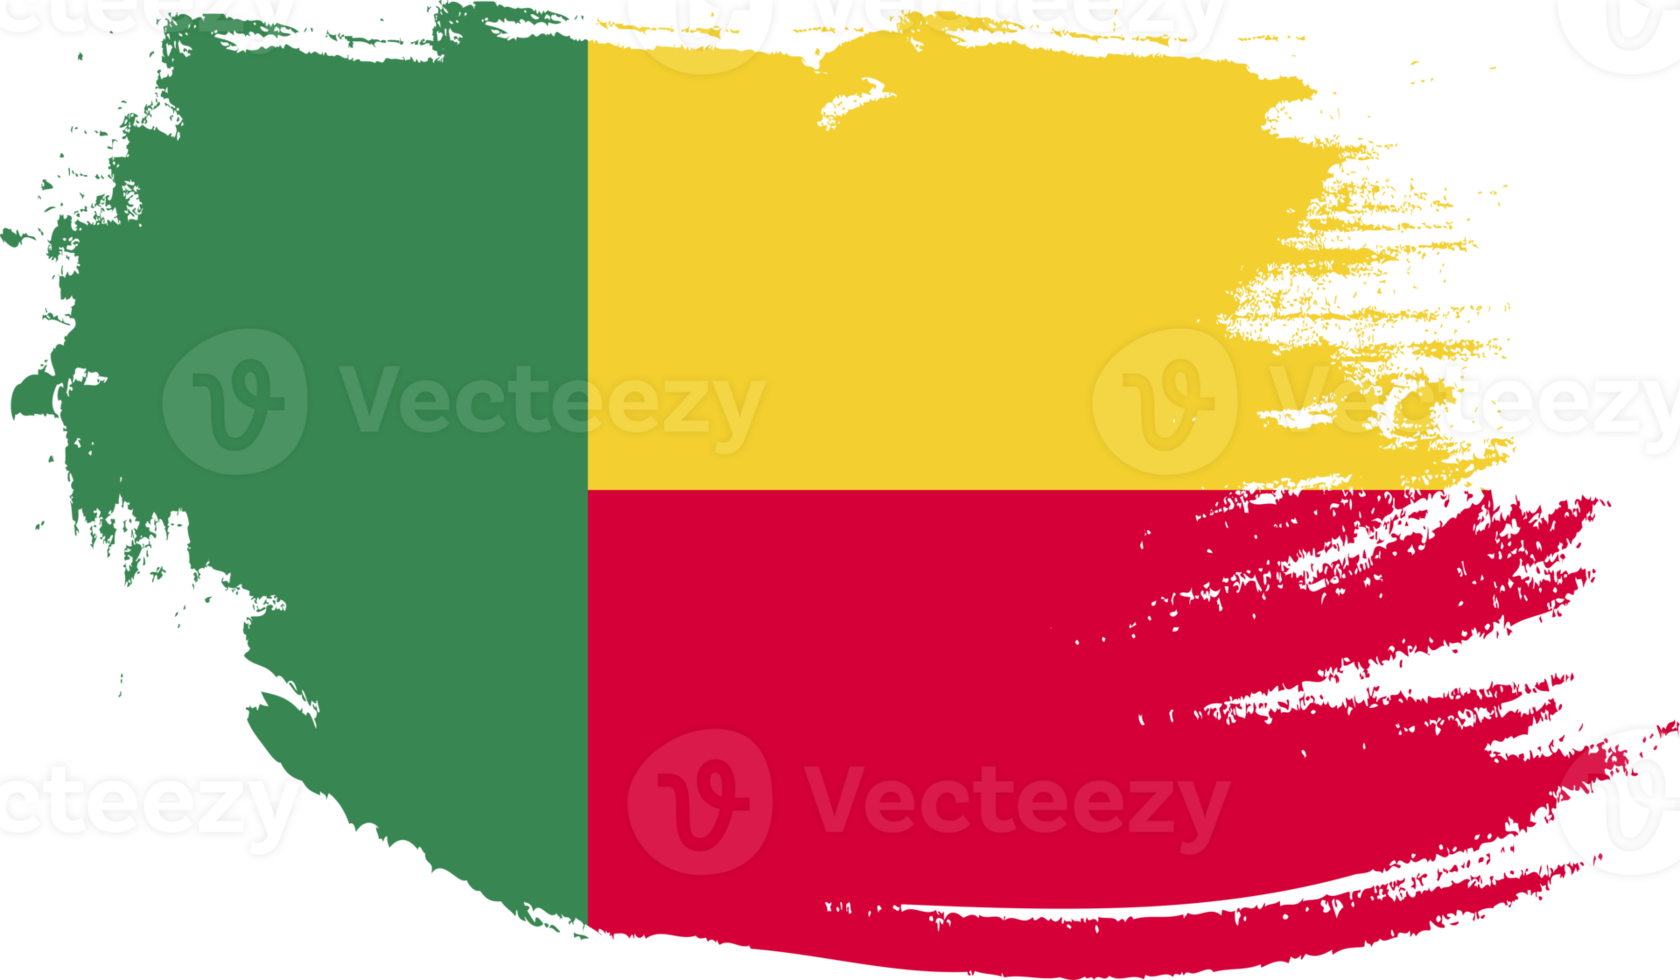 Benin flagga med grunge textur png